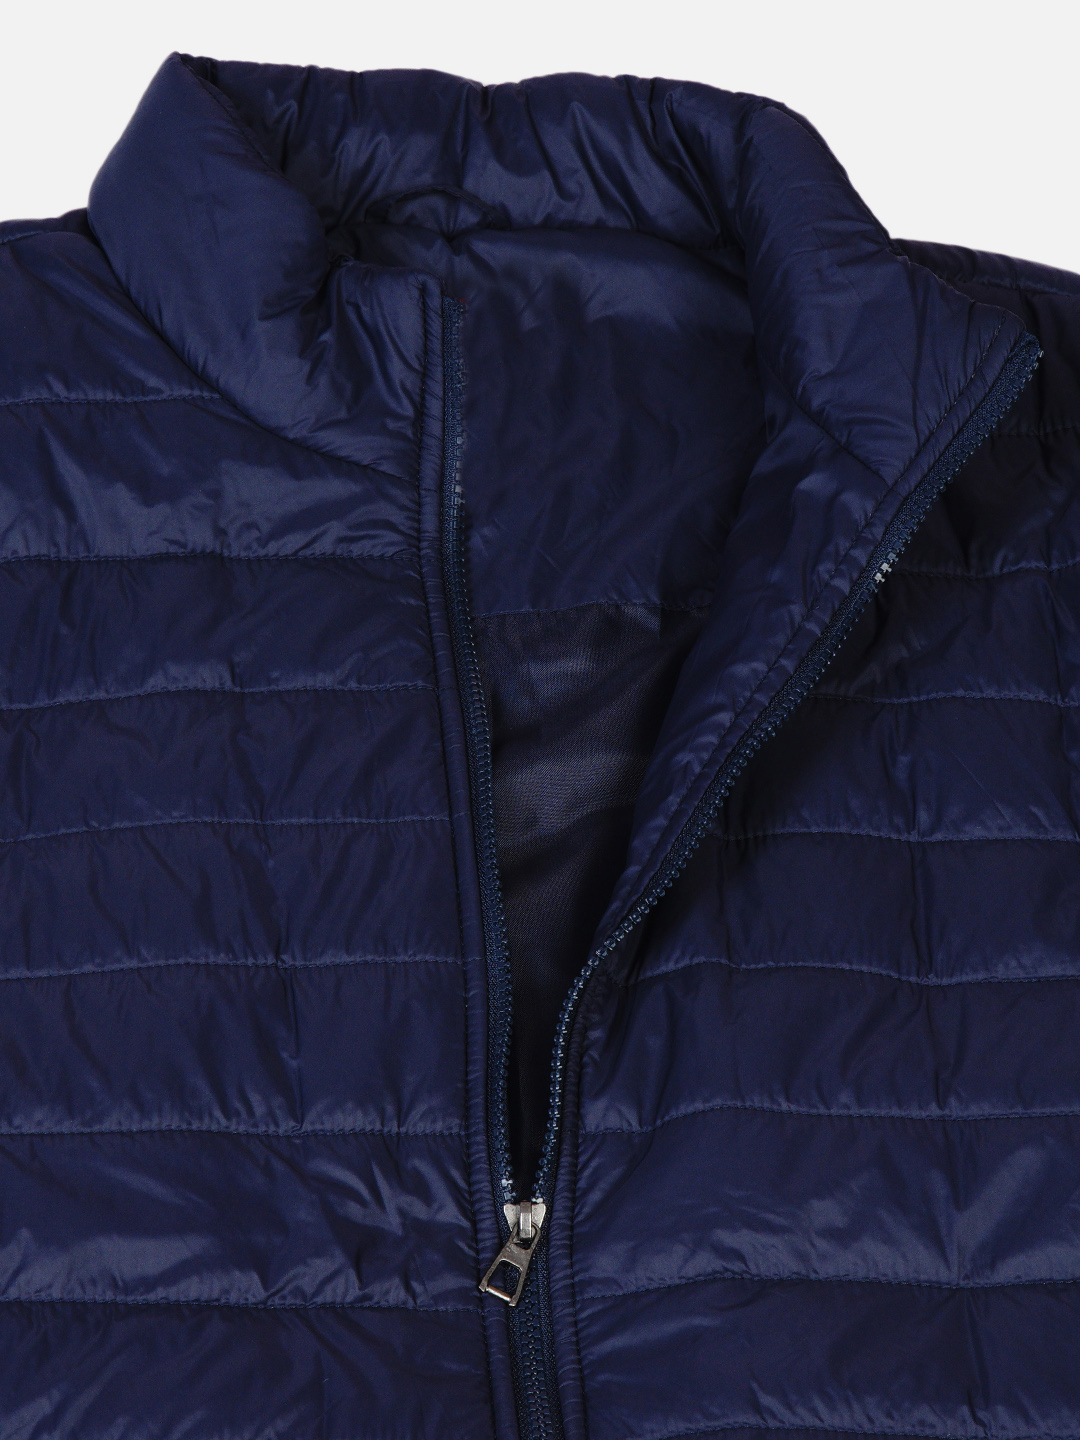 winterwear/jackets/JPJKT73012B/jpjkt73012b-2.jpg